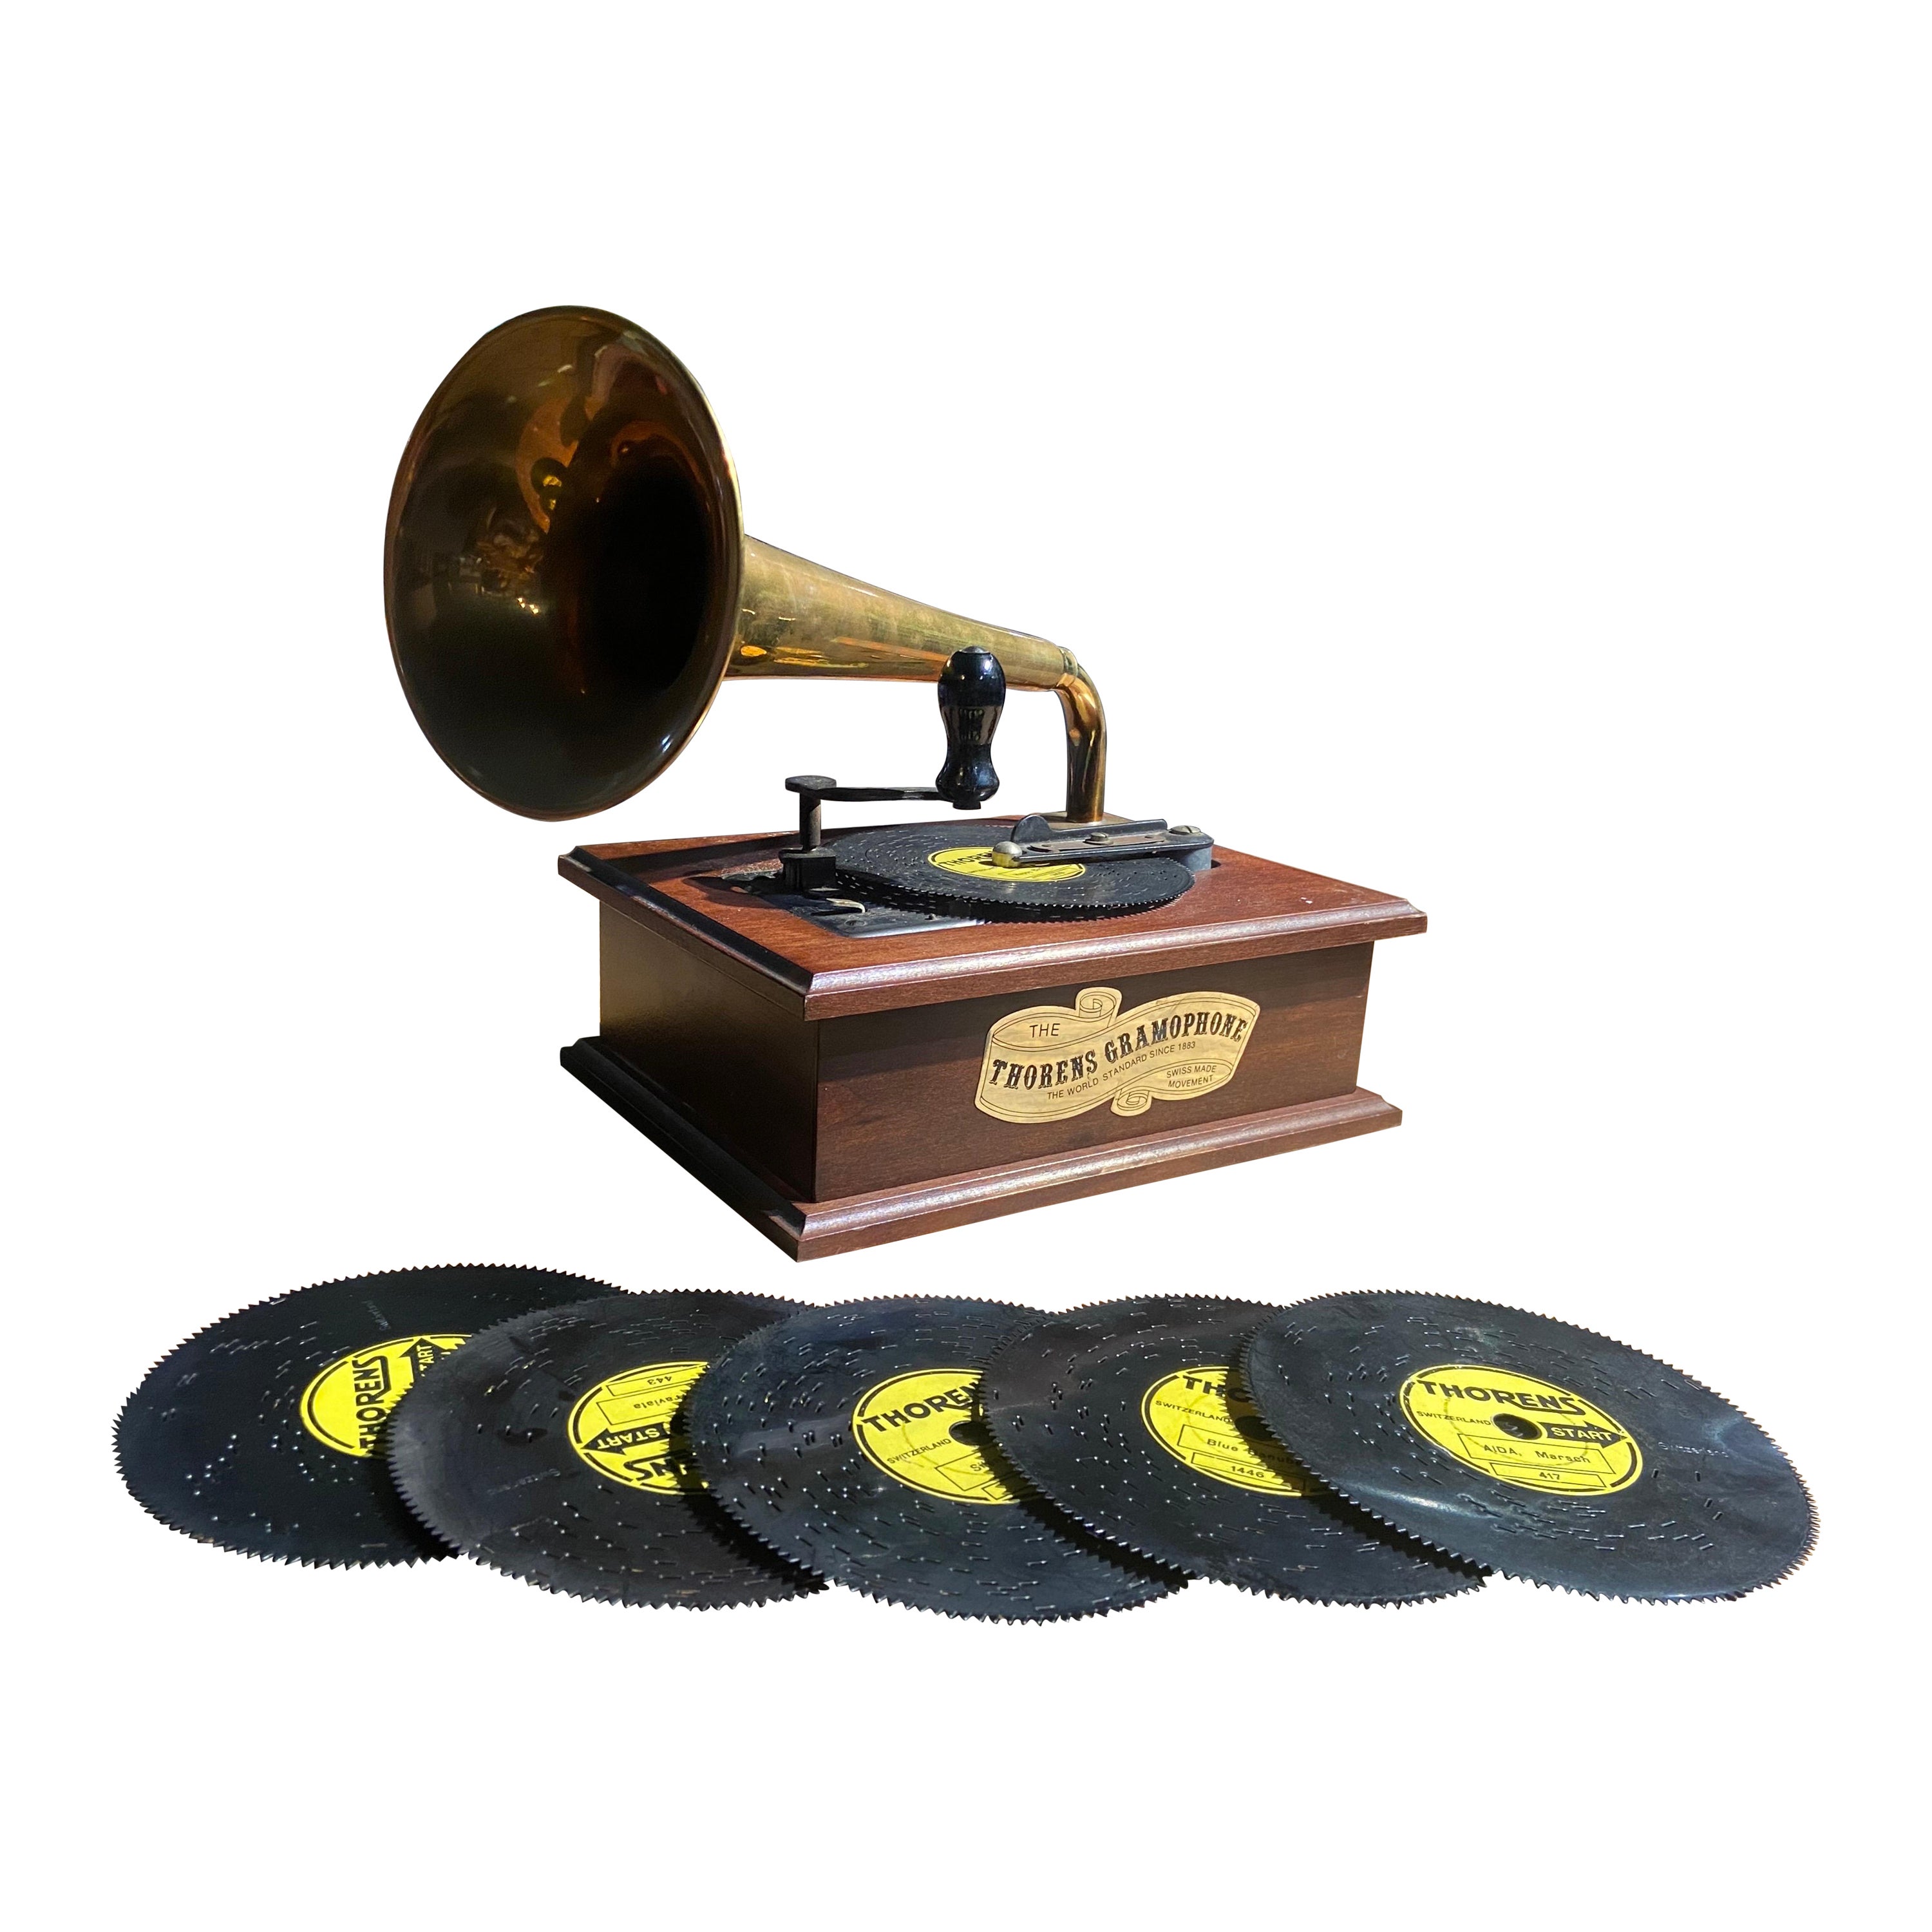 Thorens Gramophone AD-30 Plattenspieler-Musikkasten aus dem 20. Jahrhundert